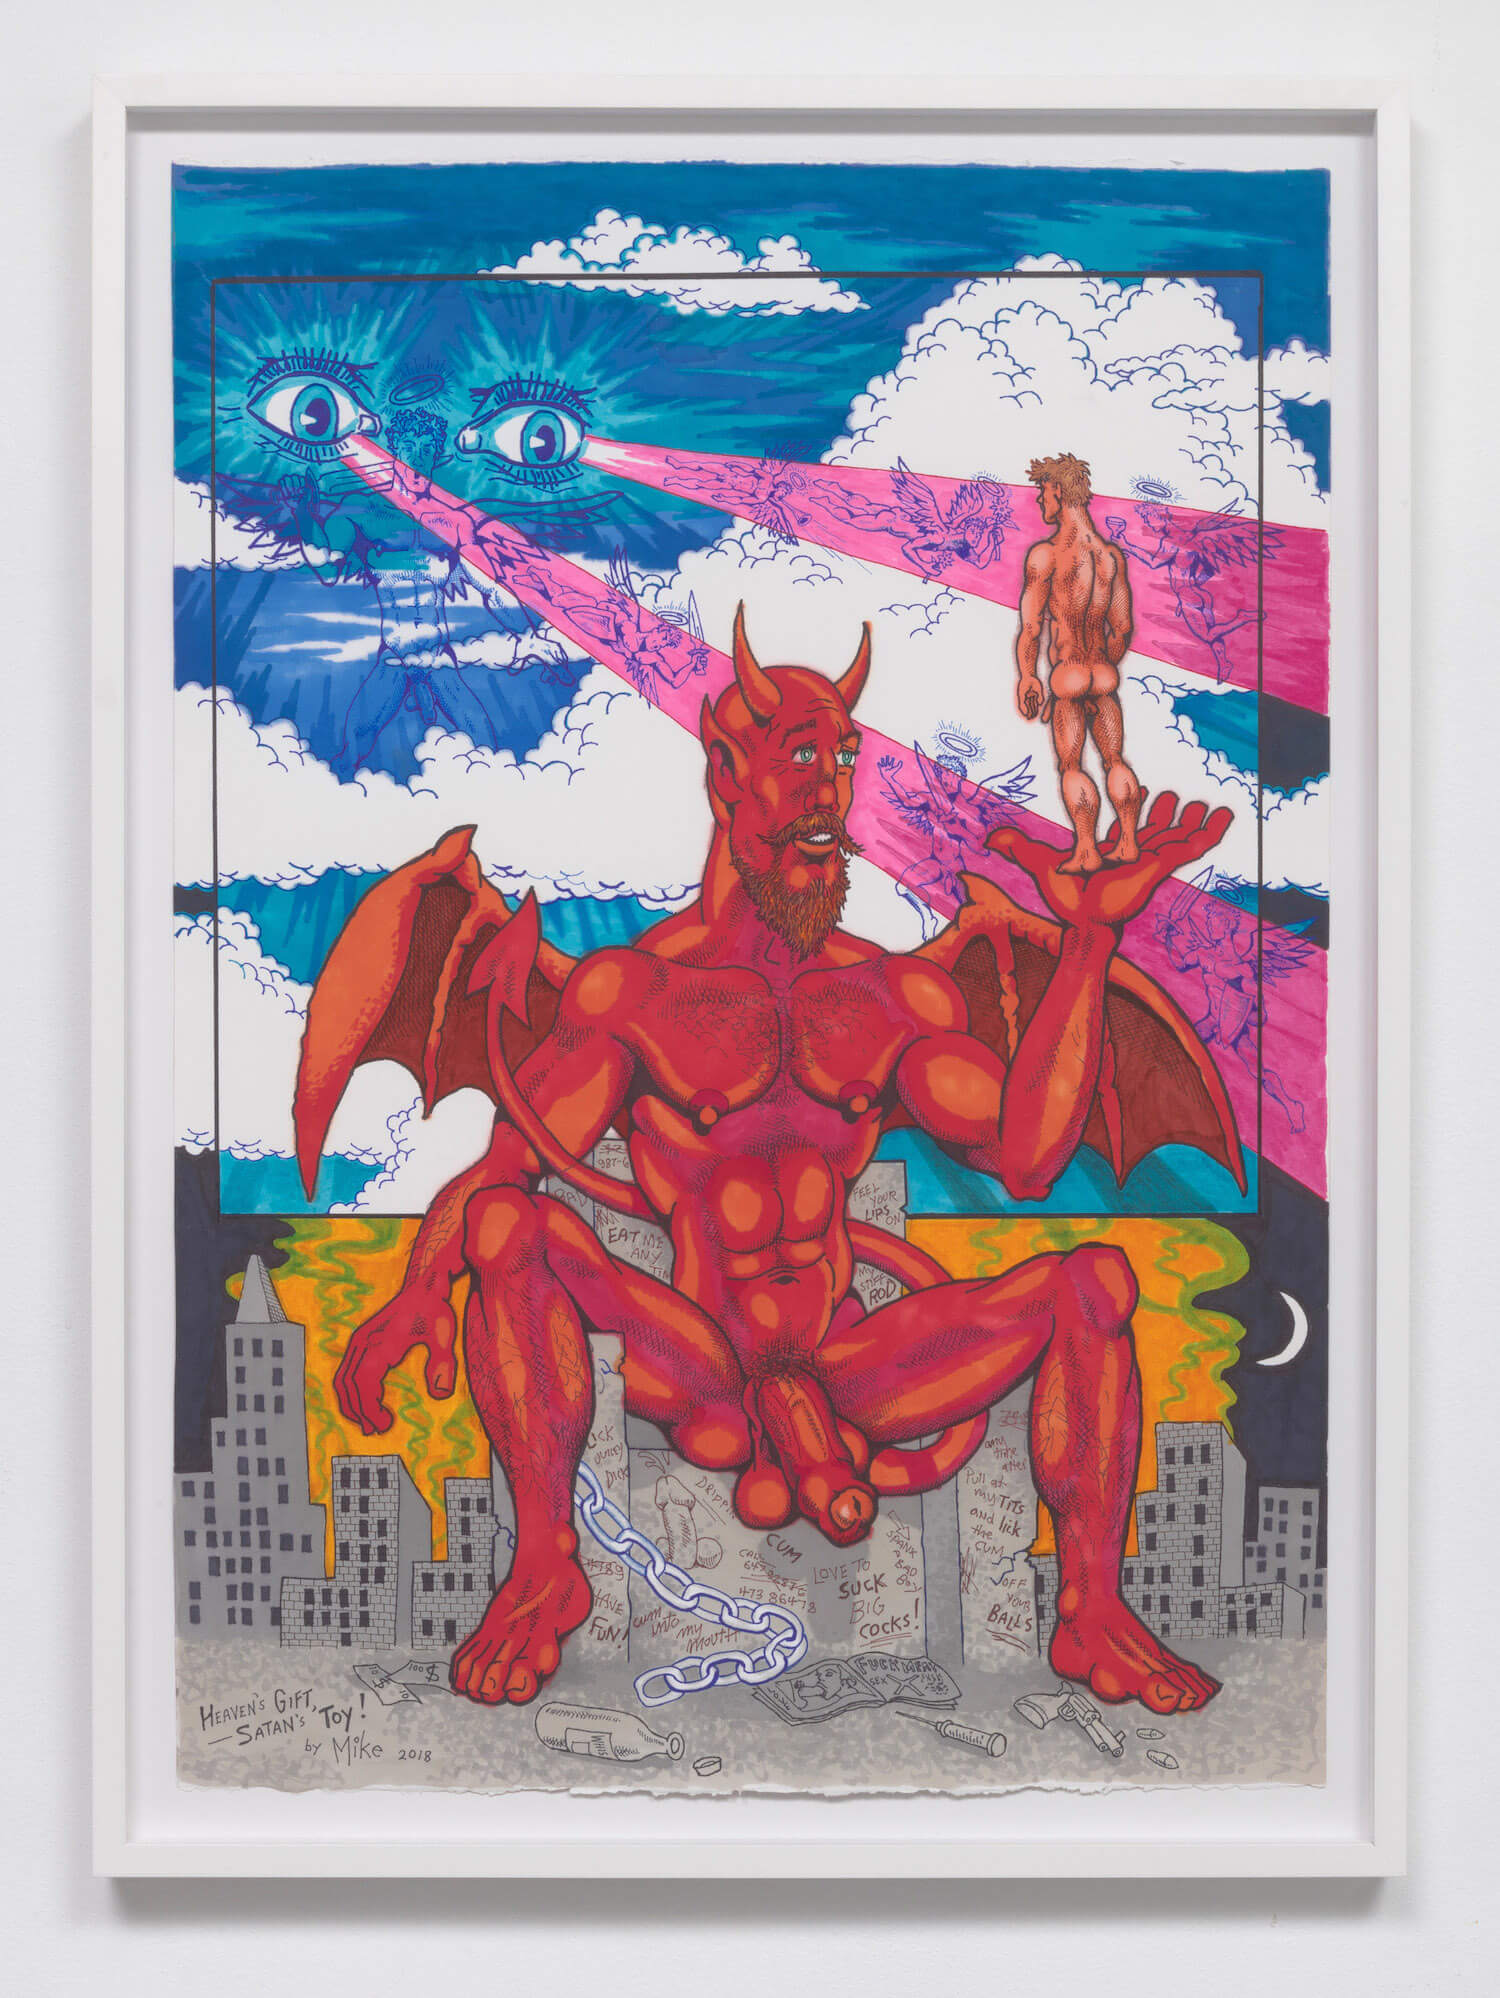 Kuchar, Heaven's Gift, Satan's Toy, 2018 (MK 18.006) A